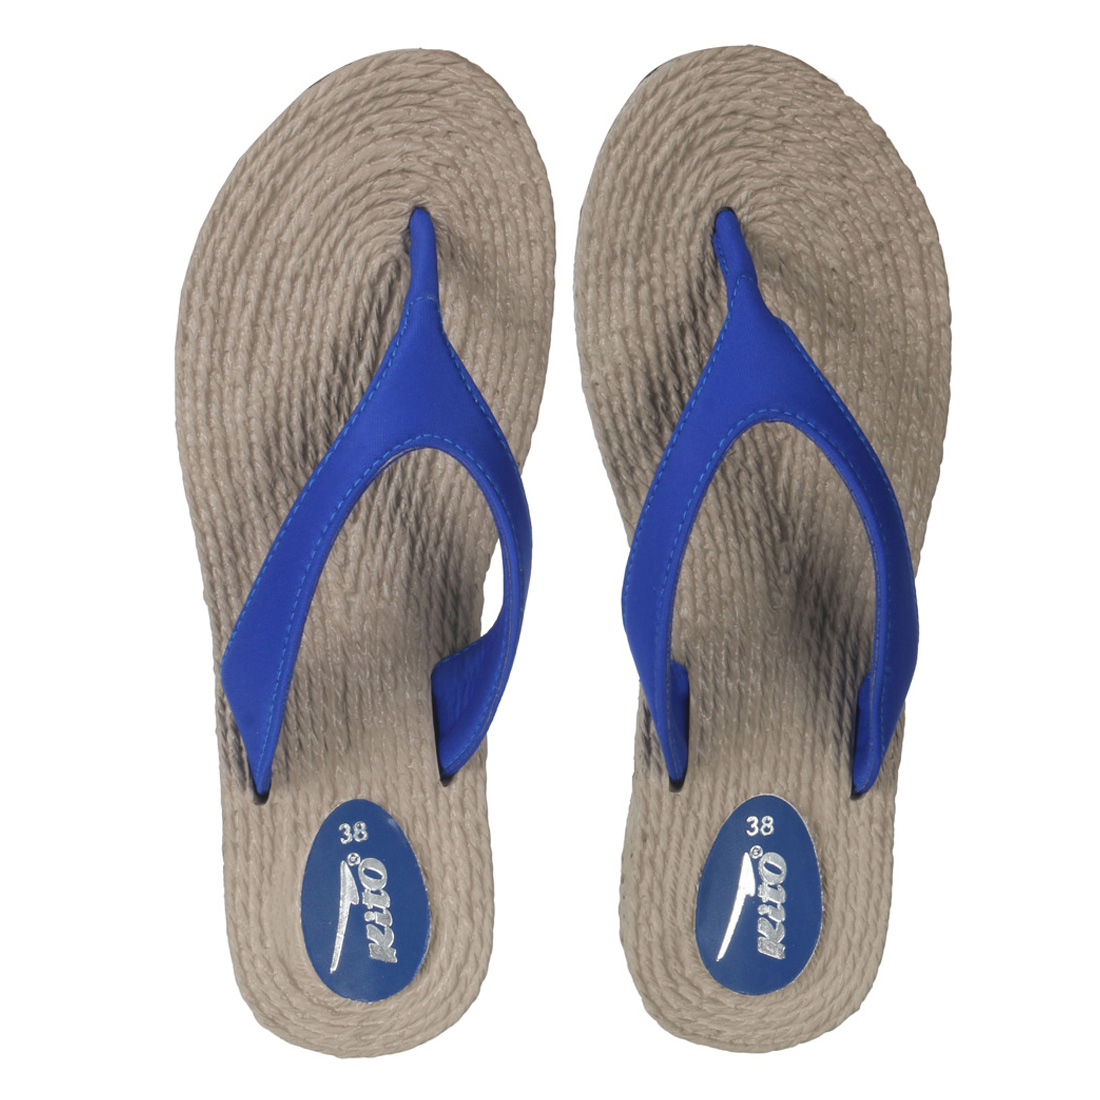 Buy Kito Women's Blue Flip Flops Online @ ₹699 from ShopClues